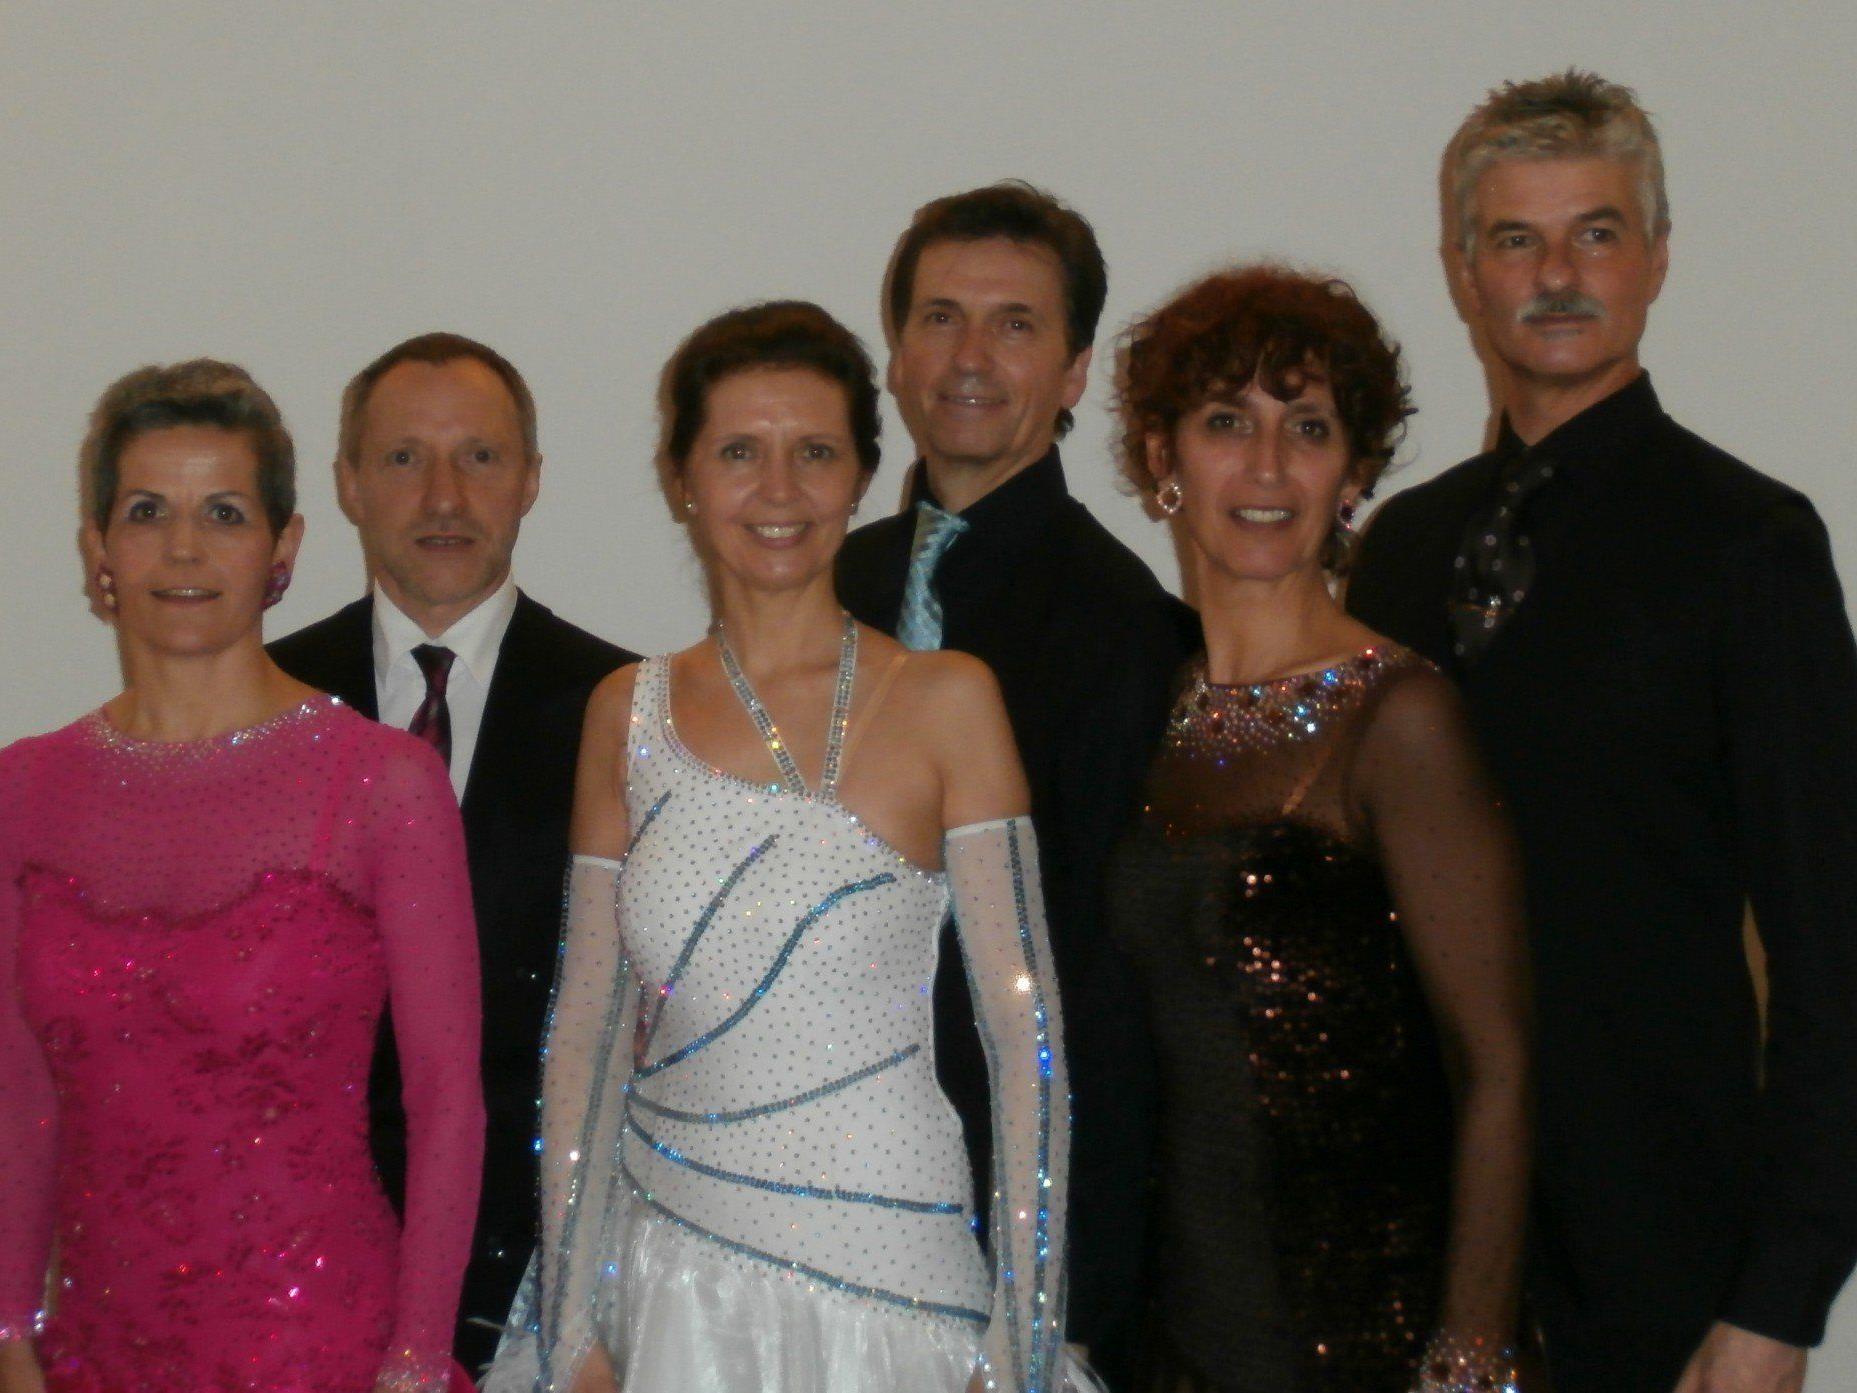 v.l.: Barbara+Eugen Kathan, Conni+Lothar Gabl, Ingrid Mol+Thijs Niesten; auf dem Bild fehlen Yannick Descher u. Angela Beck.